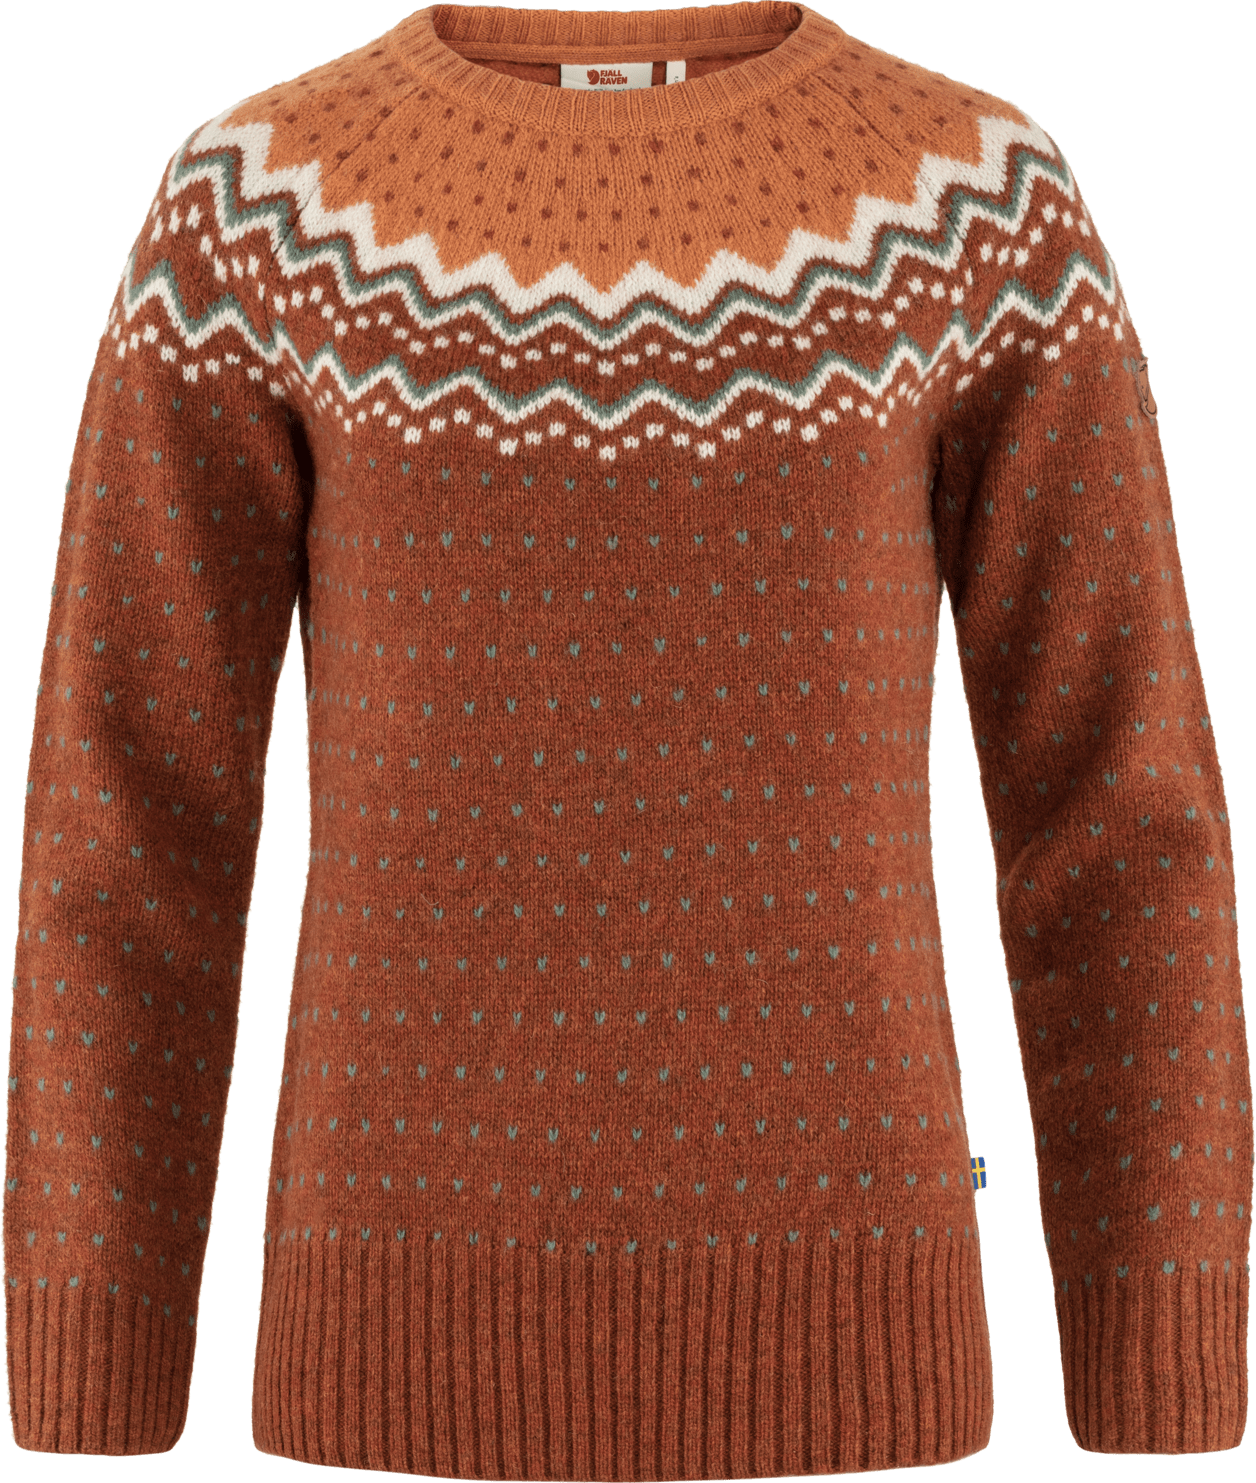 Women's Övik Knit Sweater Autumn Leaf-Desert Brown